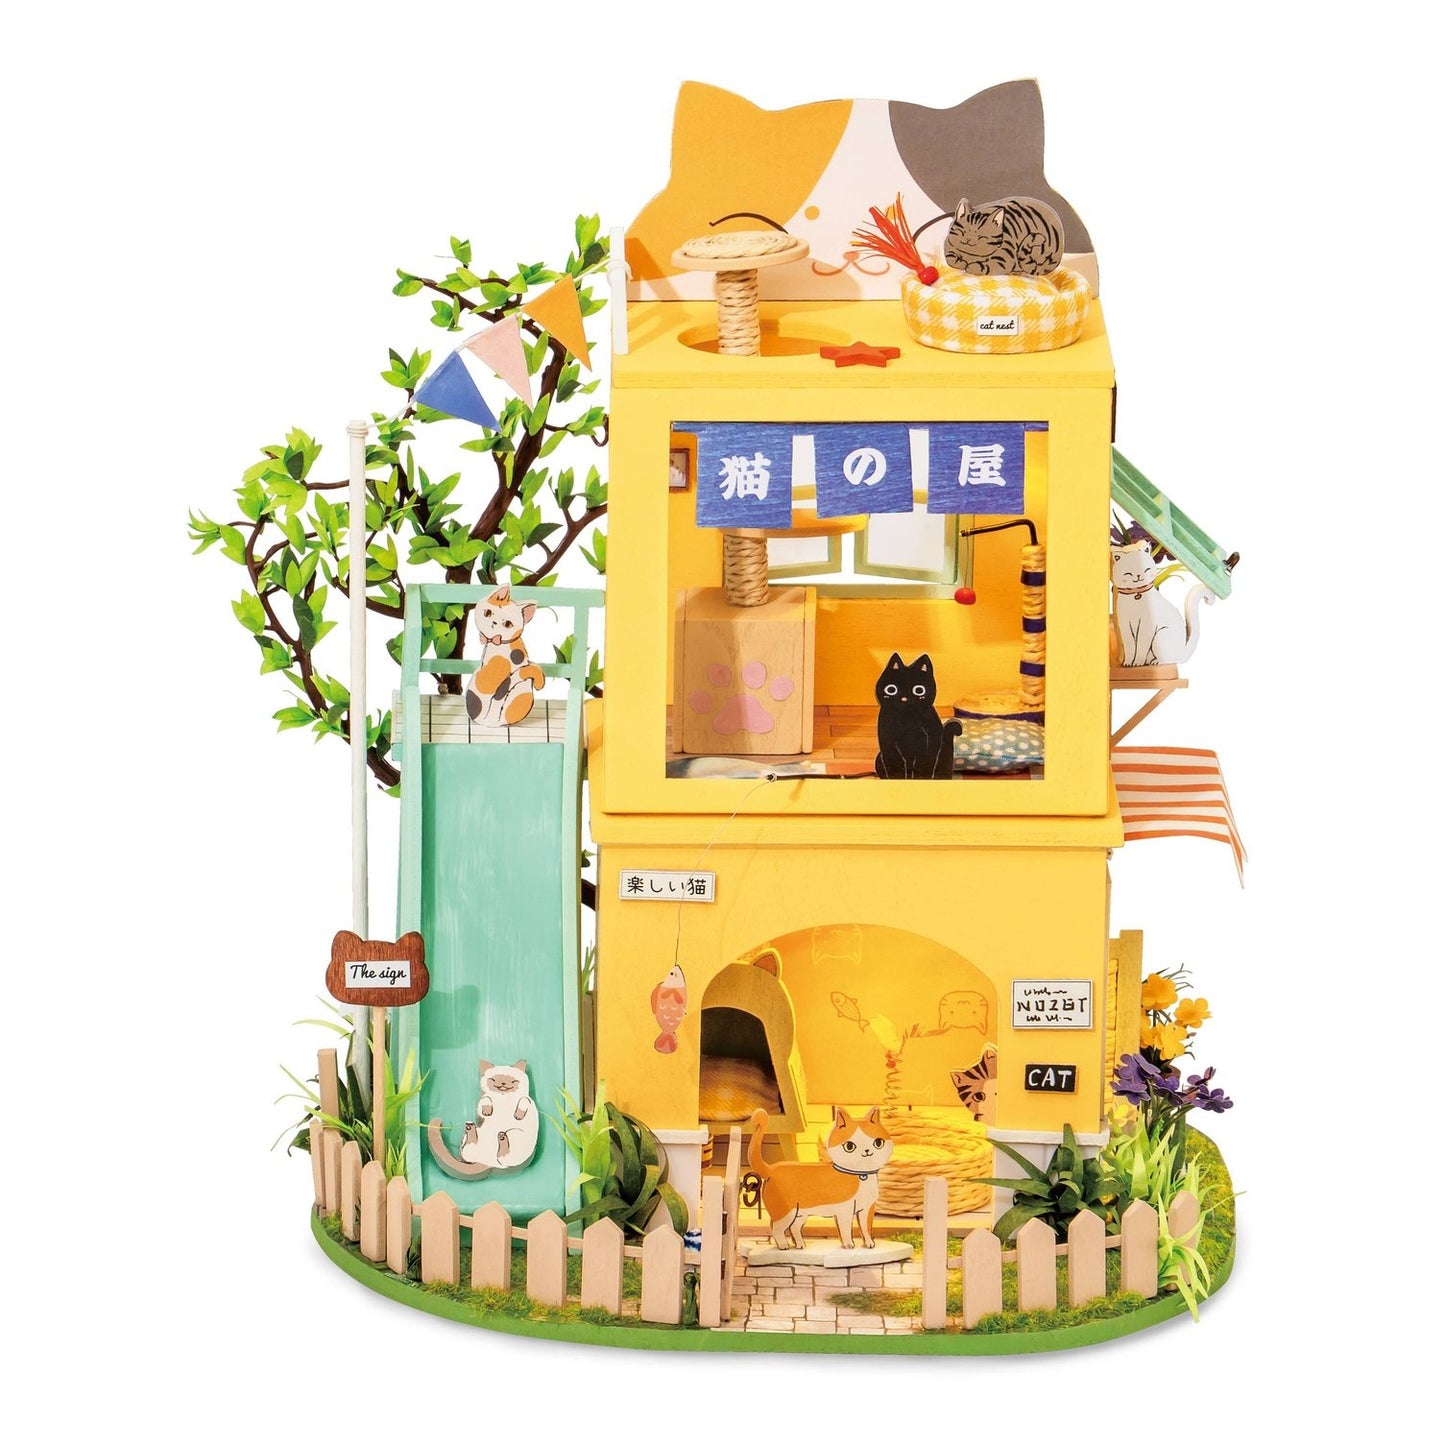 DIY Miniature Model Kit: Cat House